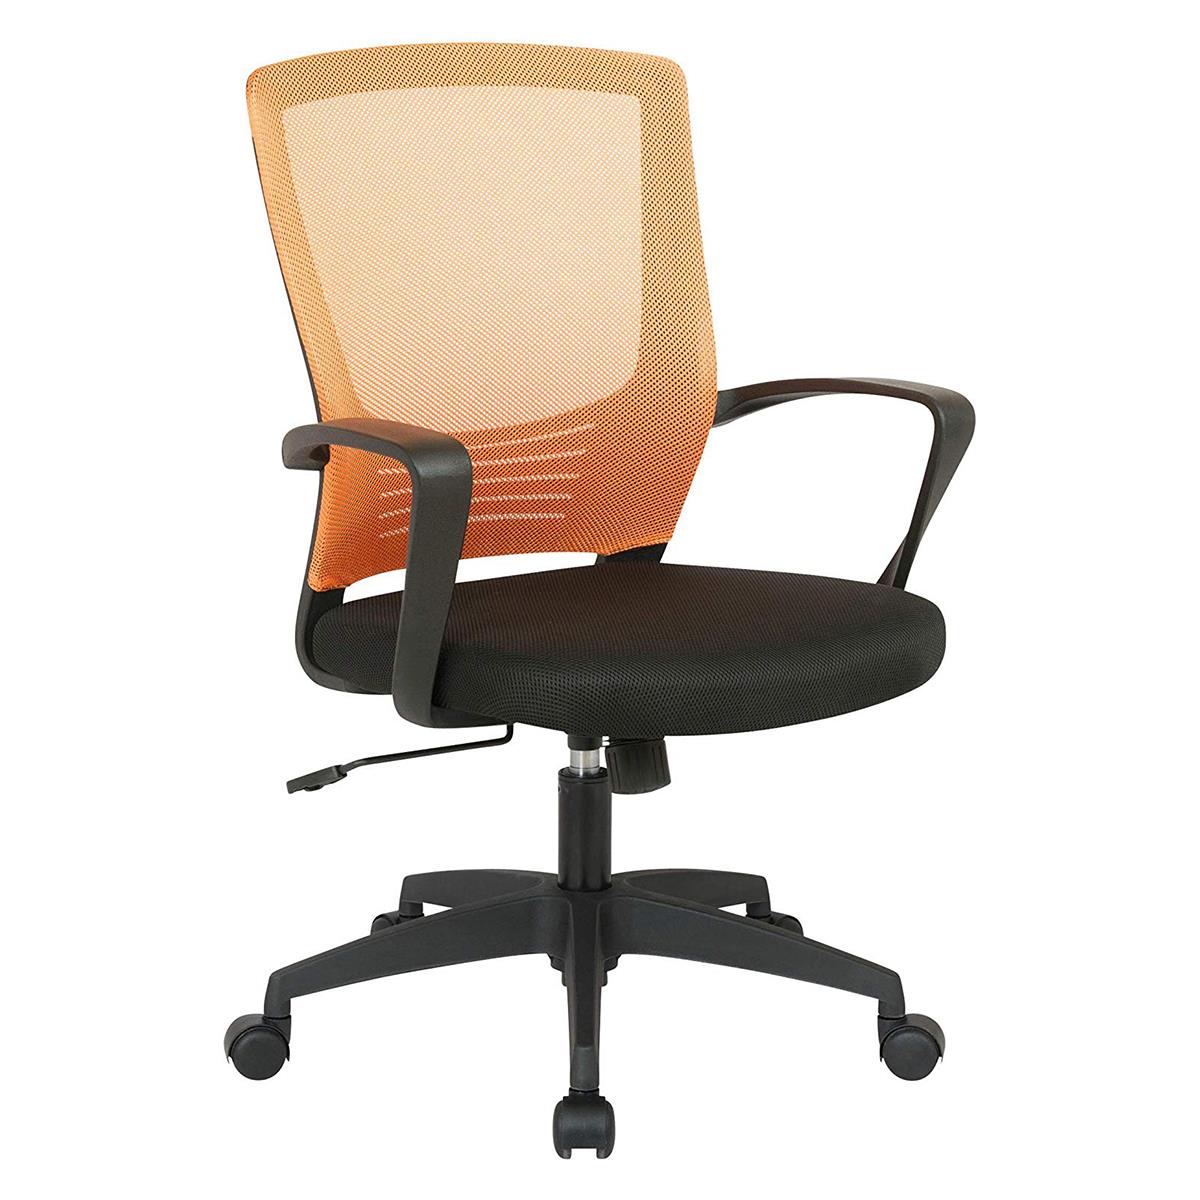 Chaise de Bureau MALIBU, Design moderne et Ergonomique, Maille Respirable, Orange